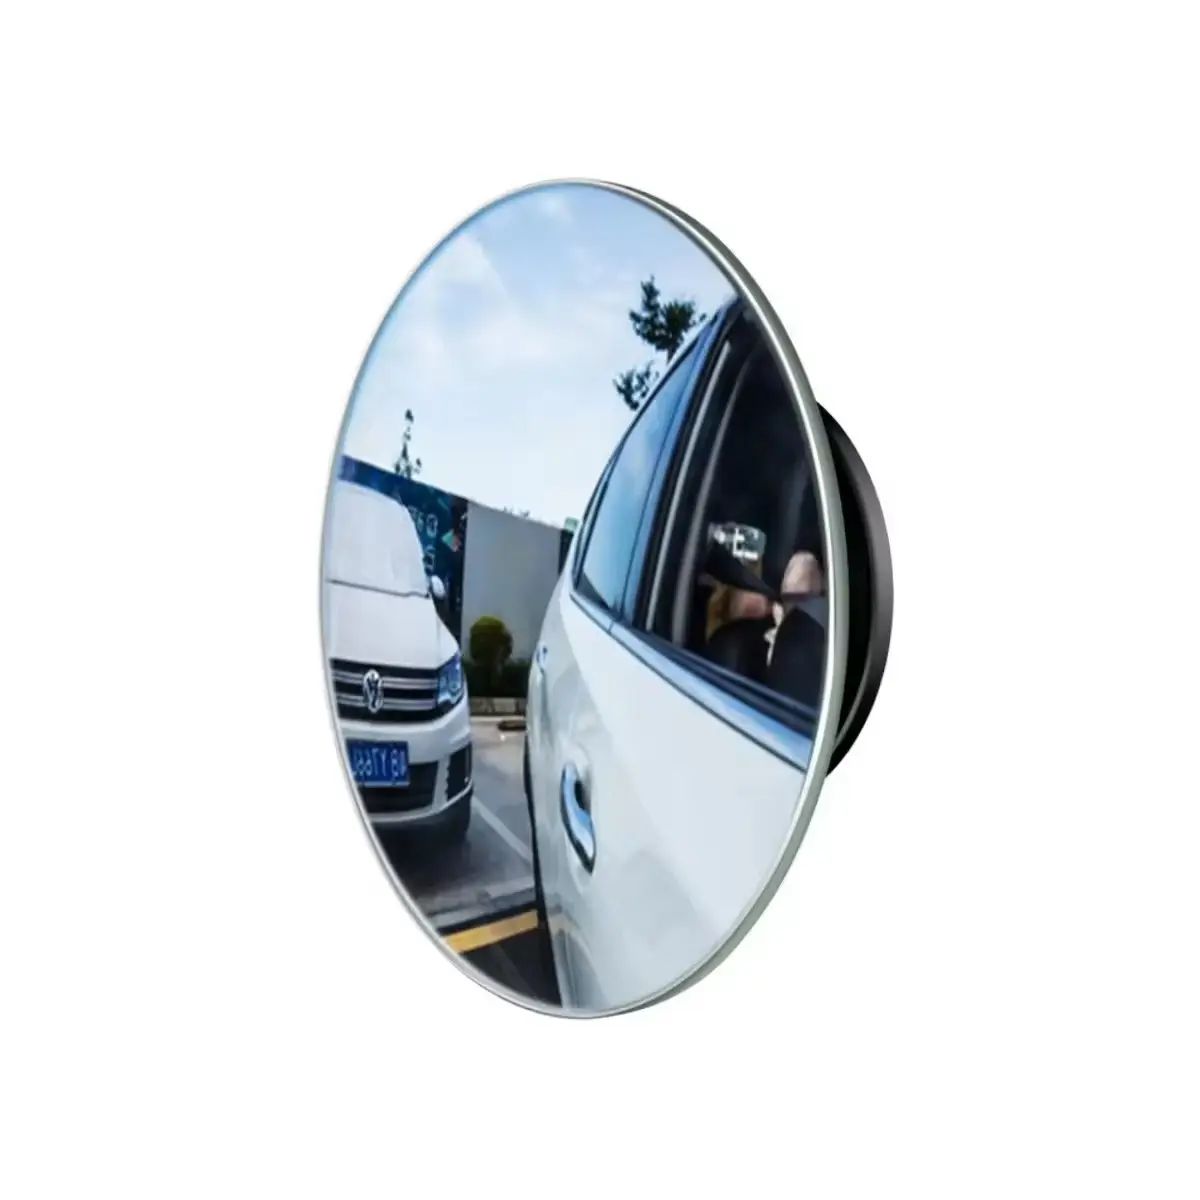 Lensa sudut lebar cermin bulat kecil, cermin sudut lebar rotasi 360 derajat dapat disesuaikan untuk eksterior mobil